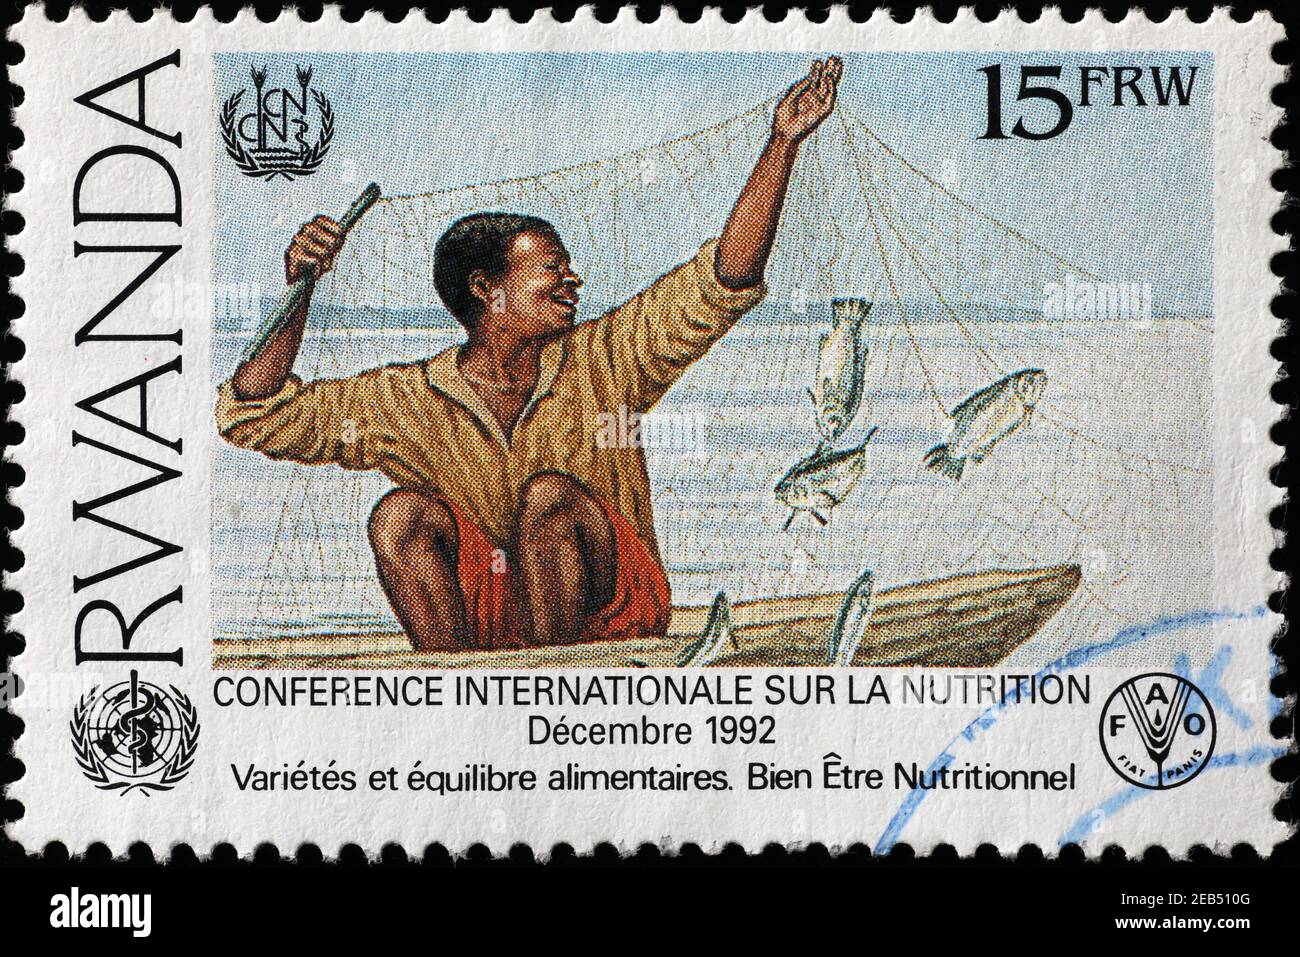 African fisherman with net on postage stamp of Rwanda Stock Photo